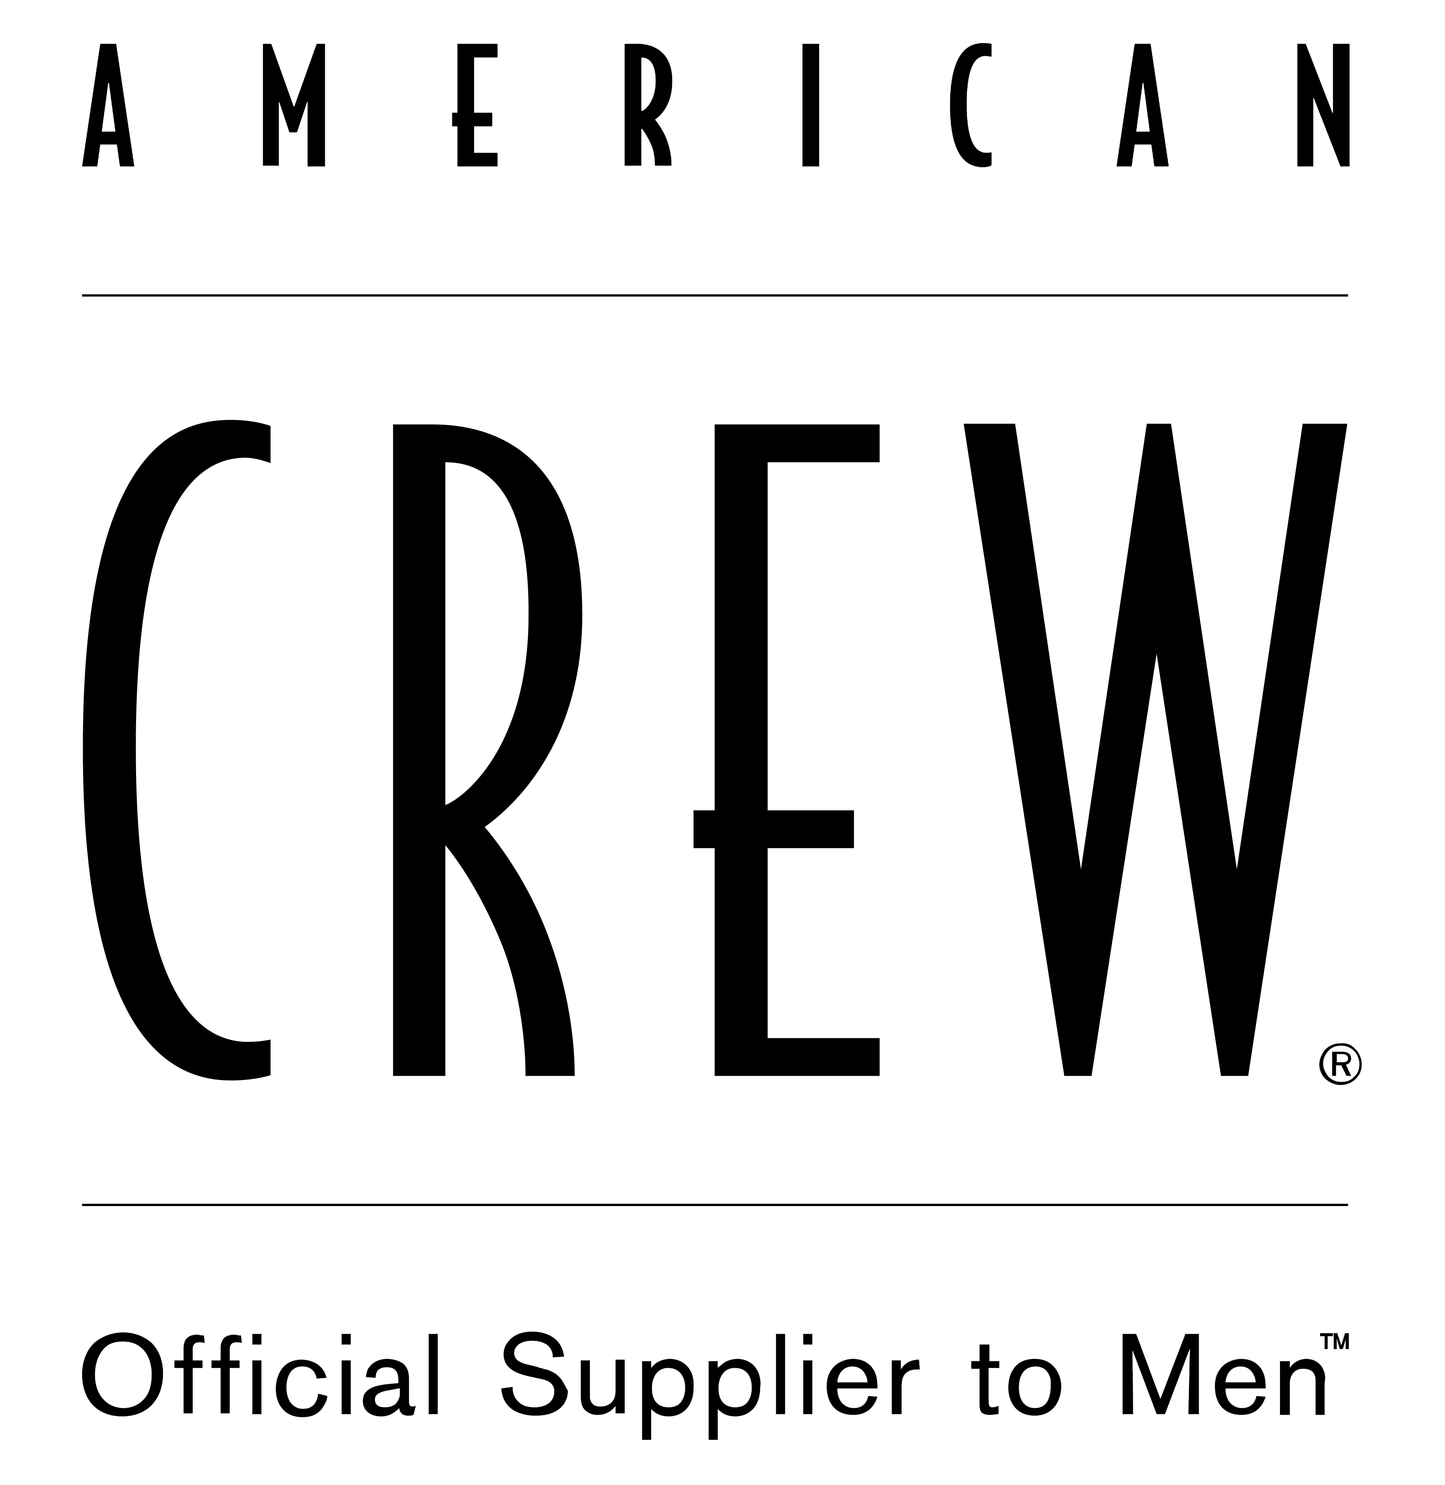 American Crew Daily Silver Shampoo 8.4 oz